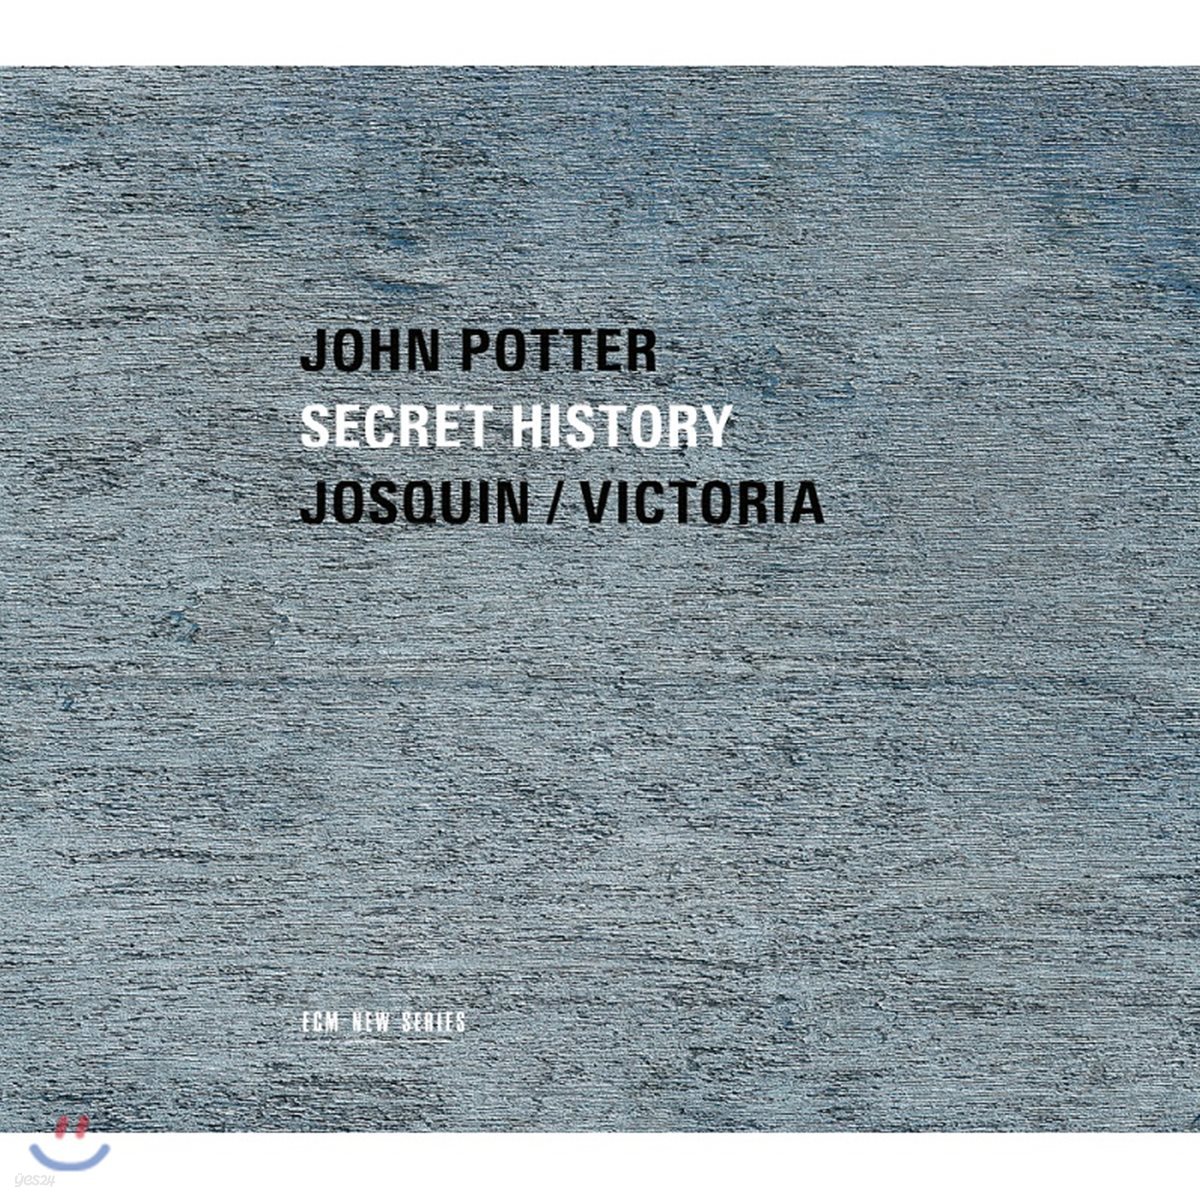 John Potter 존 포터 - 숨겨진 역사: 조스캥과 빅토리아의 음악 (Secret History: Josquin / Victoria)